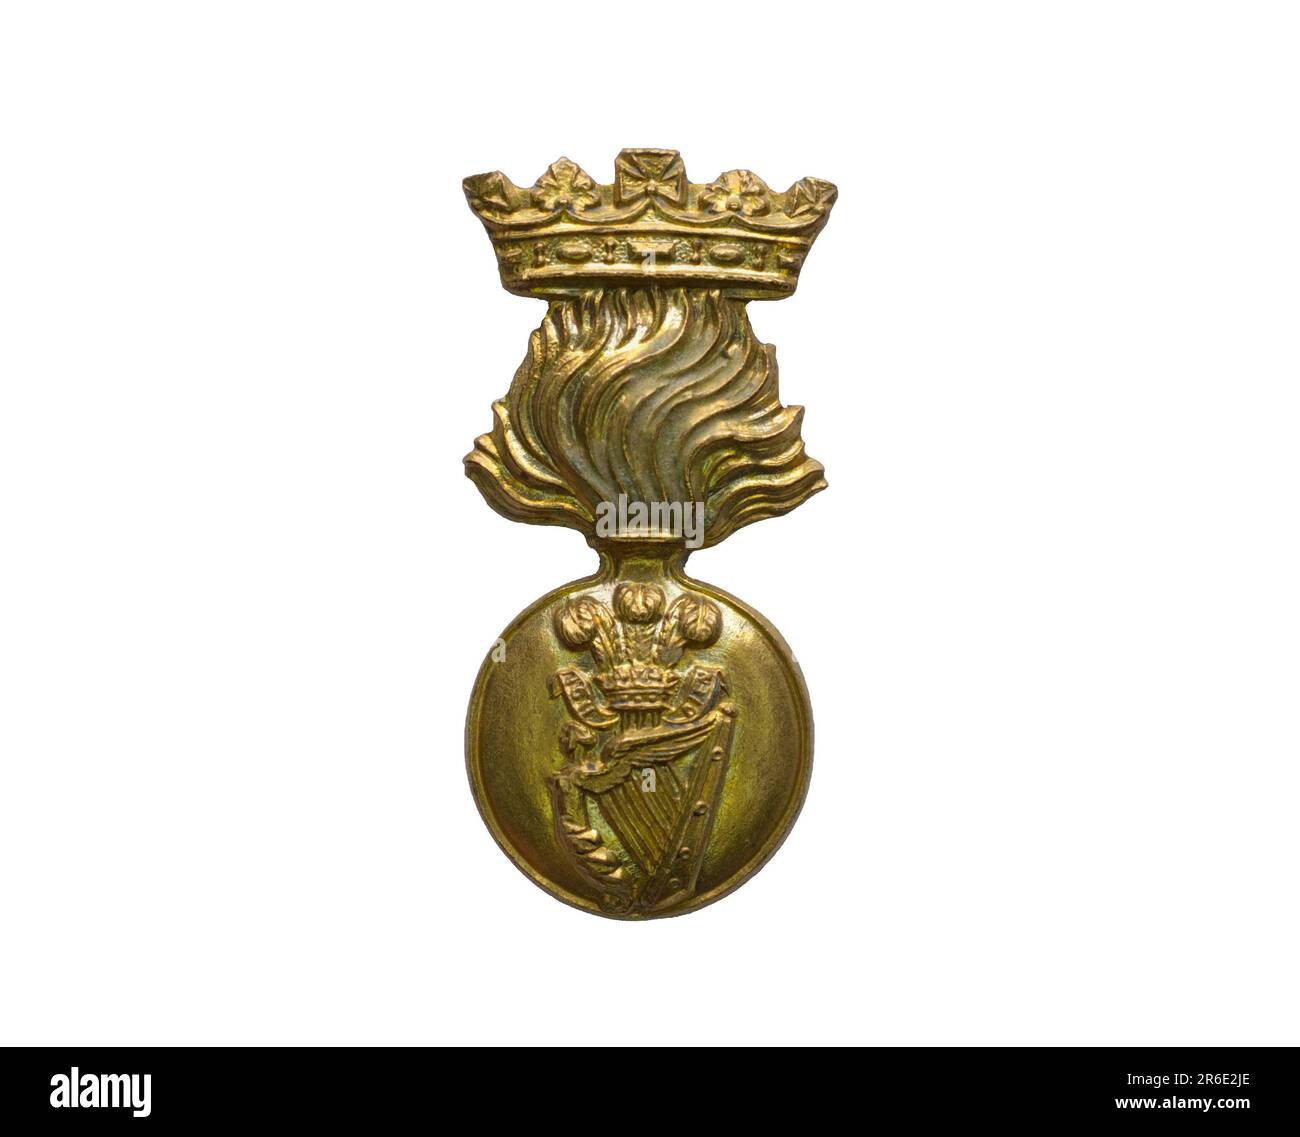 The cap badge of the Royal Irish Fusiliers. Stock Photo